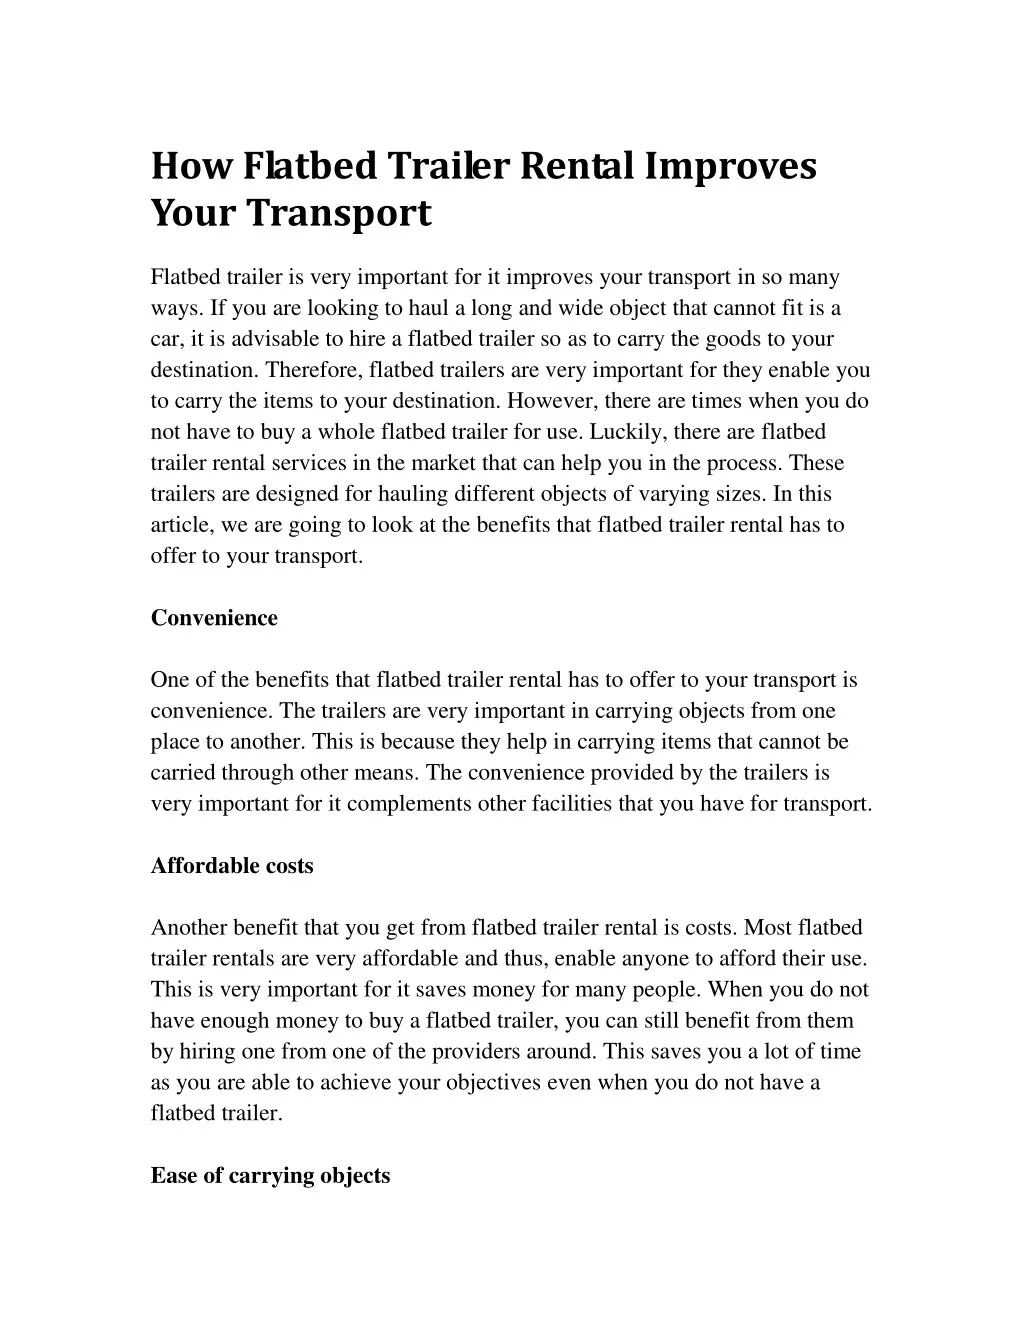 how flatbed trailer rental improves your